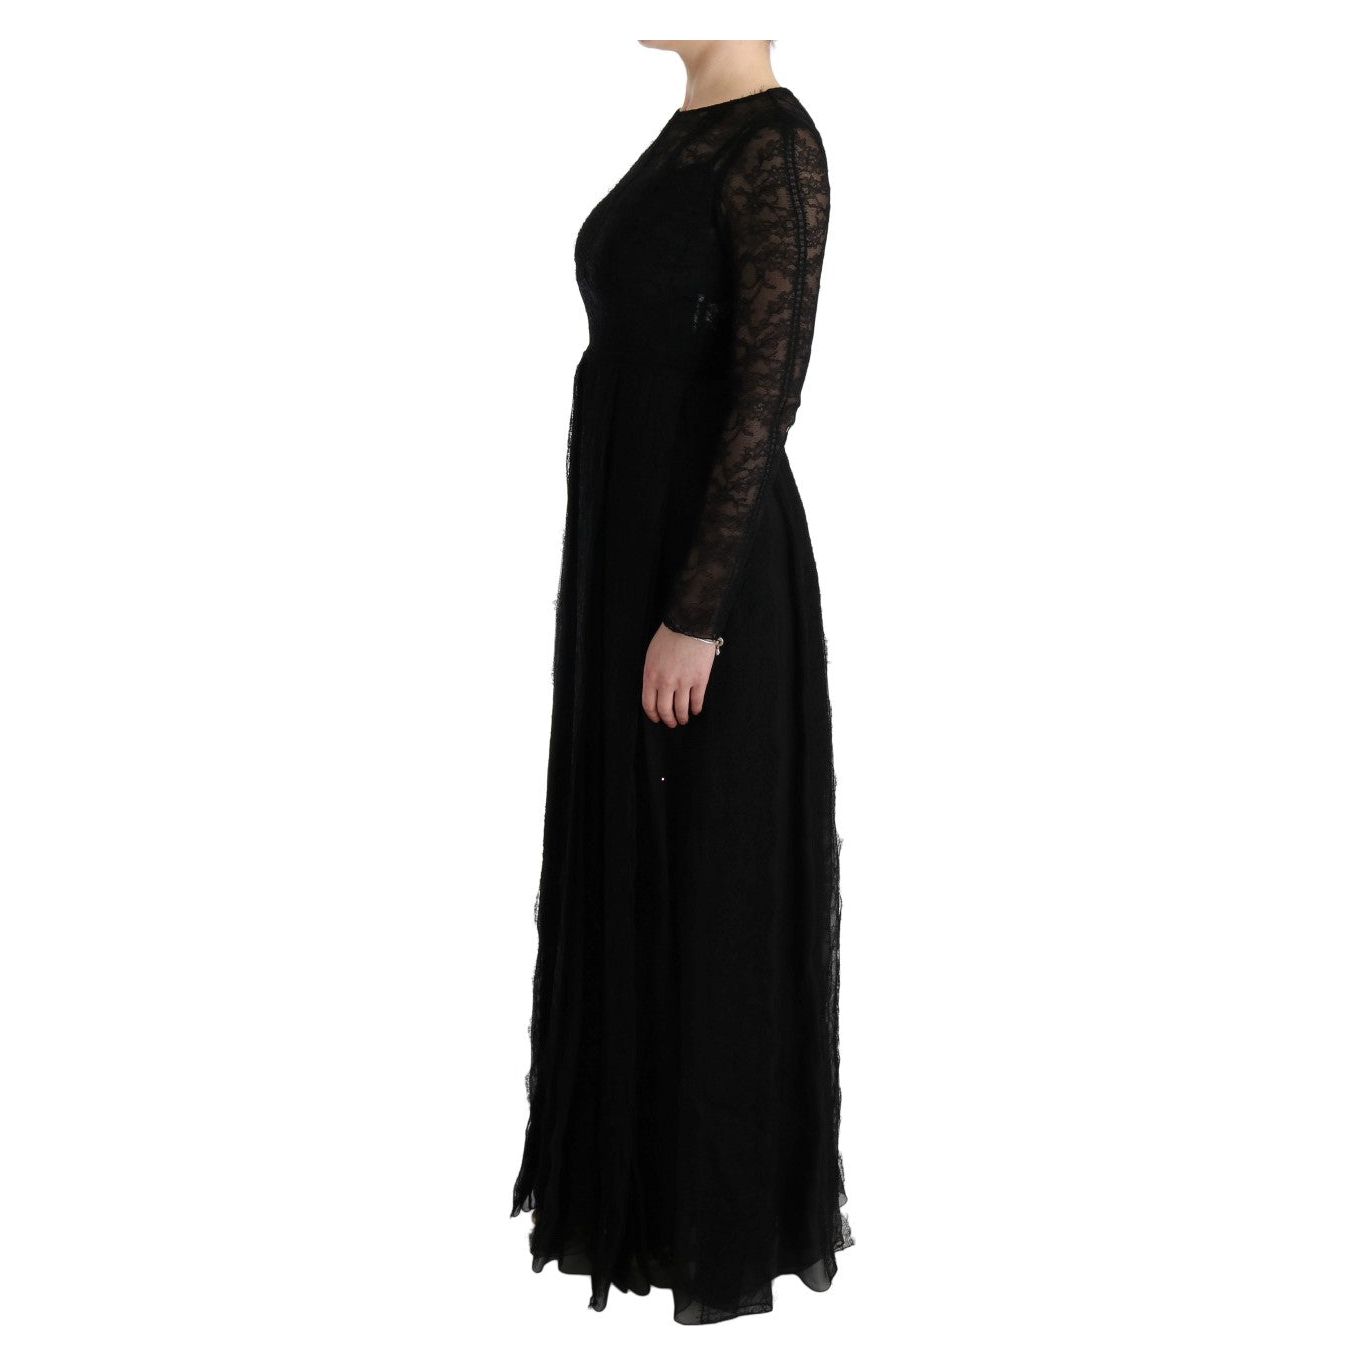 Dolce & Gabbana Elegant Black Sheath Long Sleeve Dress black-floral-lace-sheath-silk-dress 445465-black-floral-lace-sheath-silk-dress-1.jpg